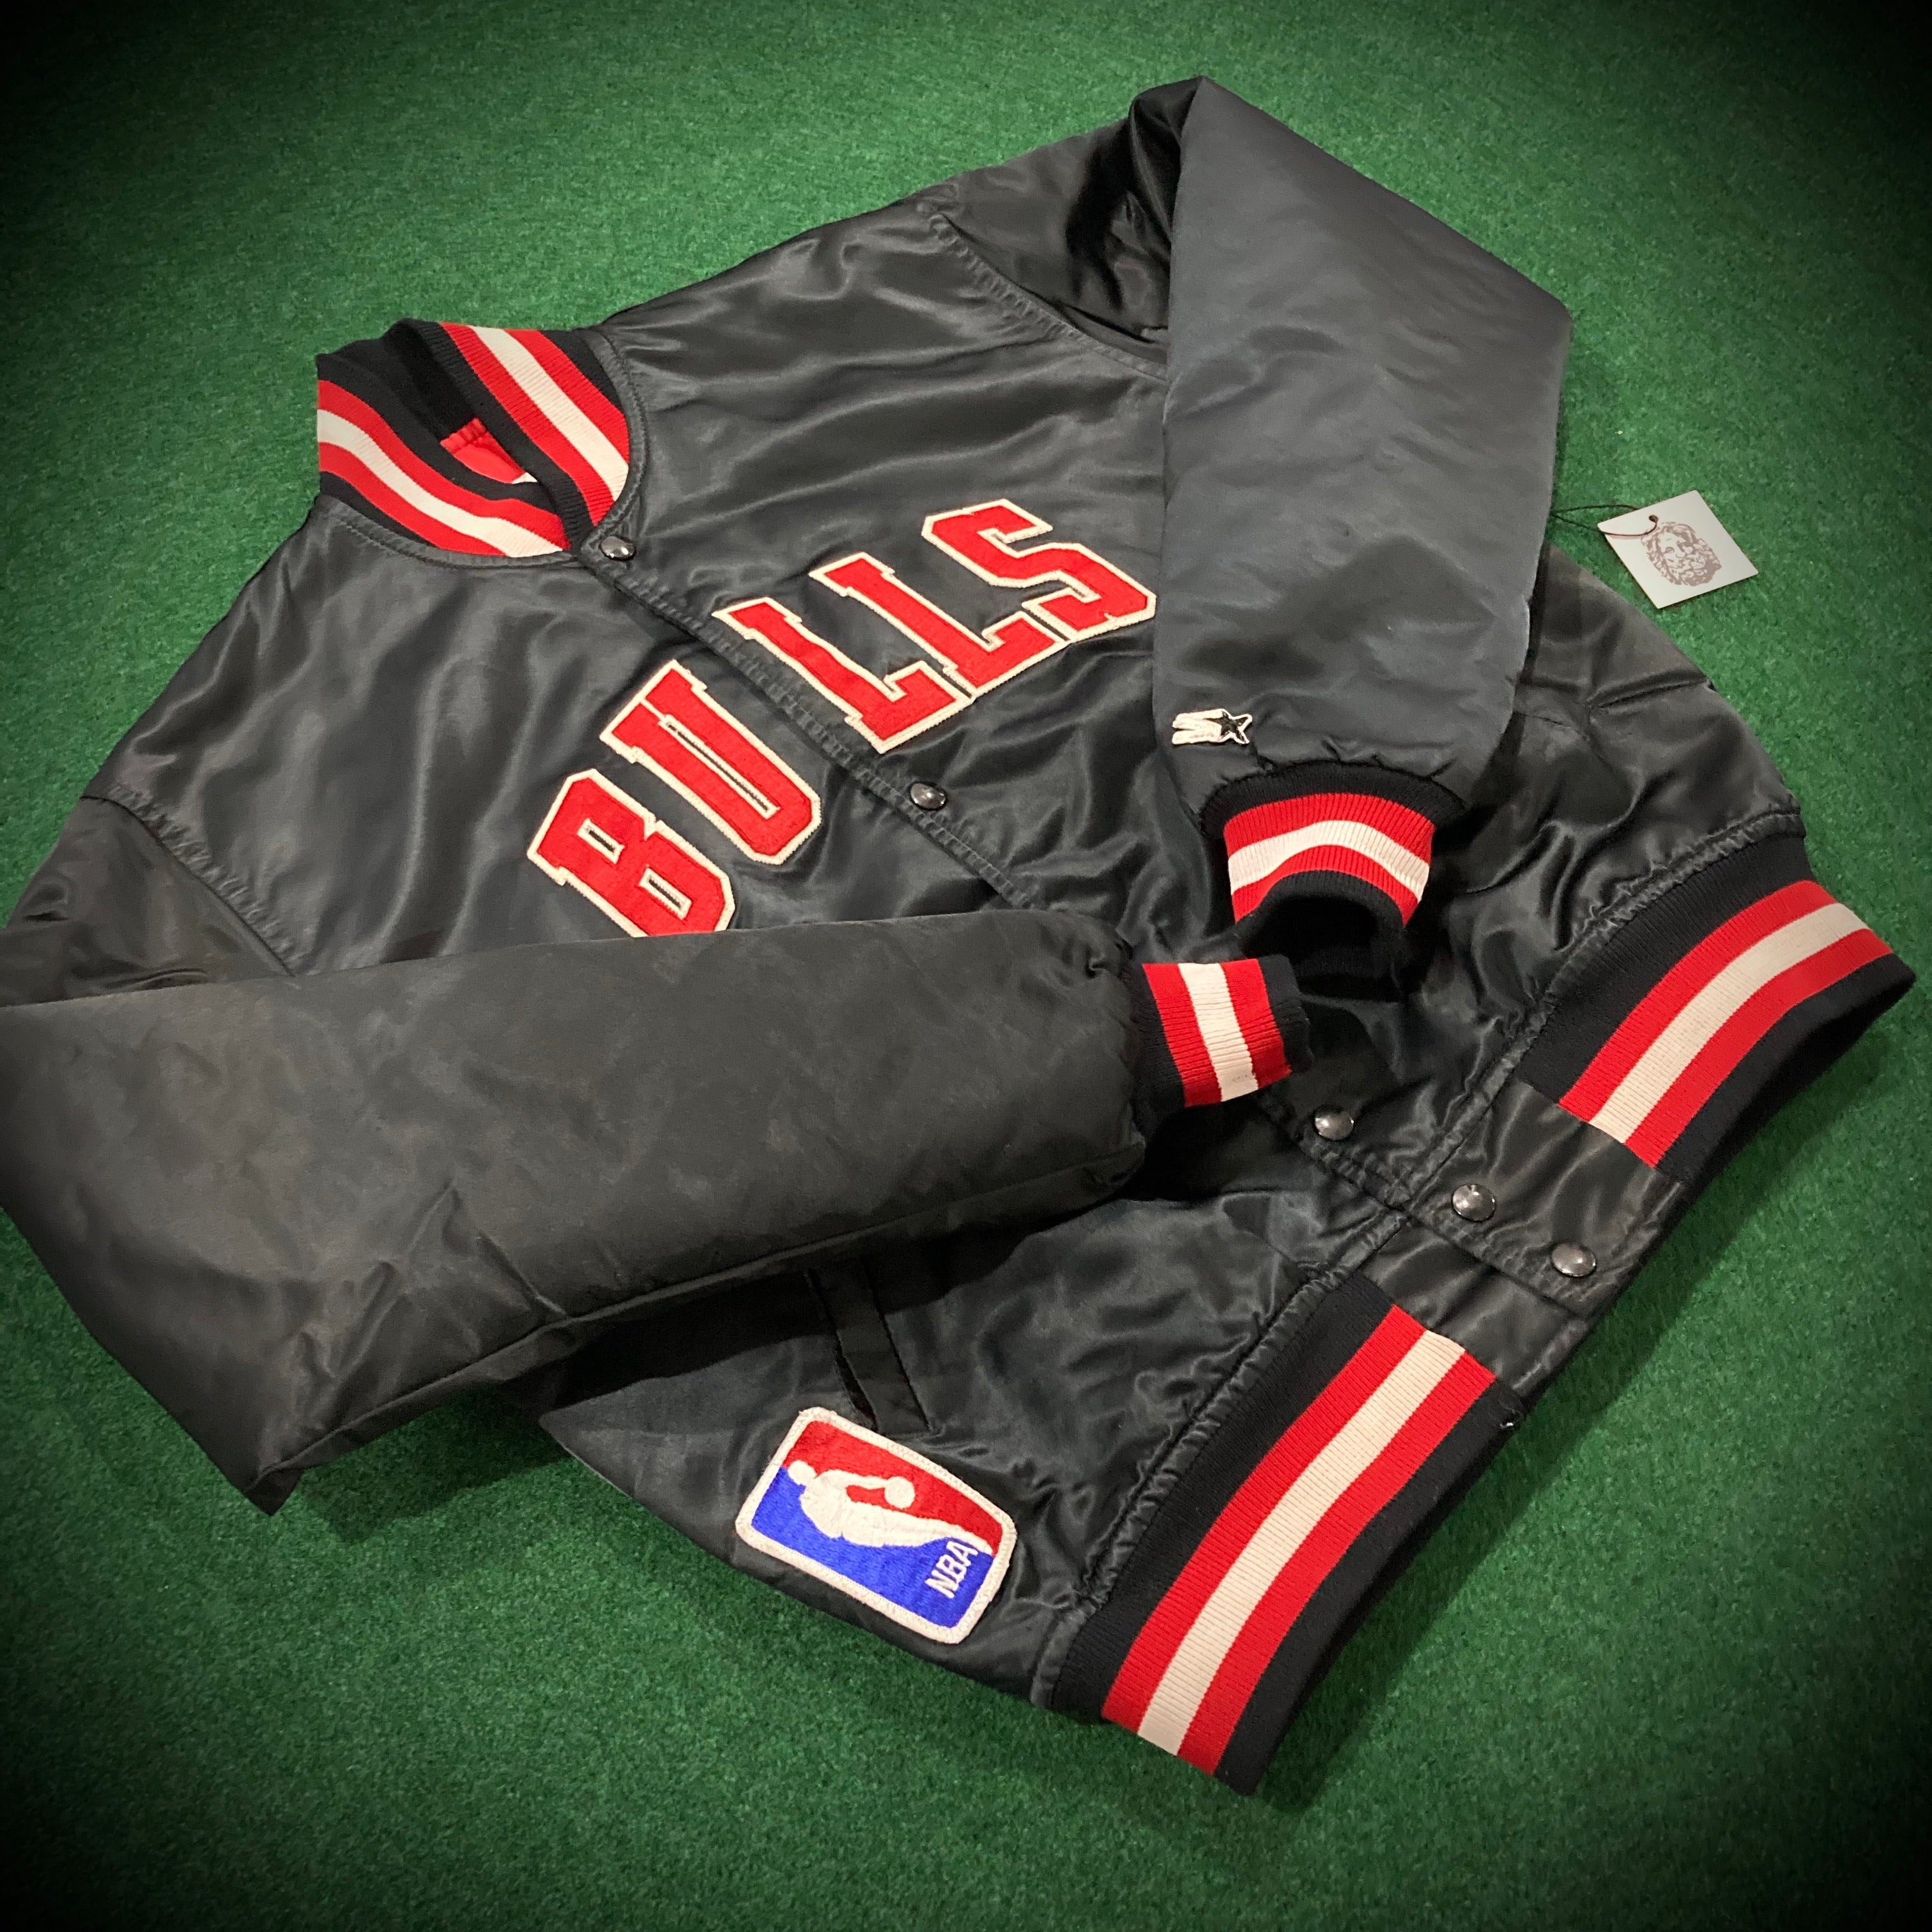 Vintage Chicago Bulls Starter Jacket – ROMAN